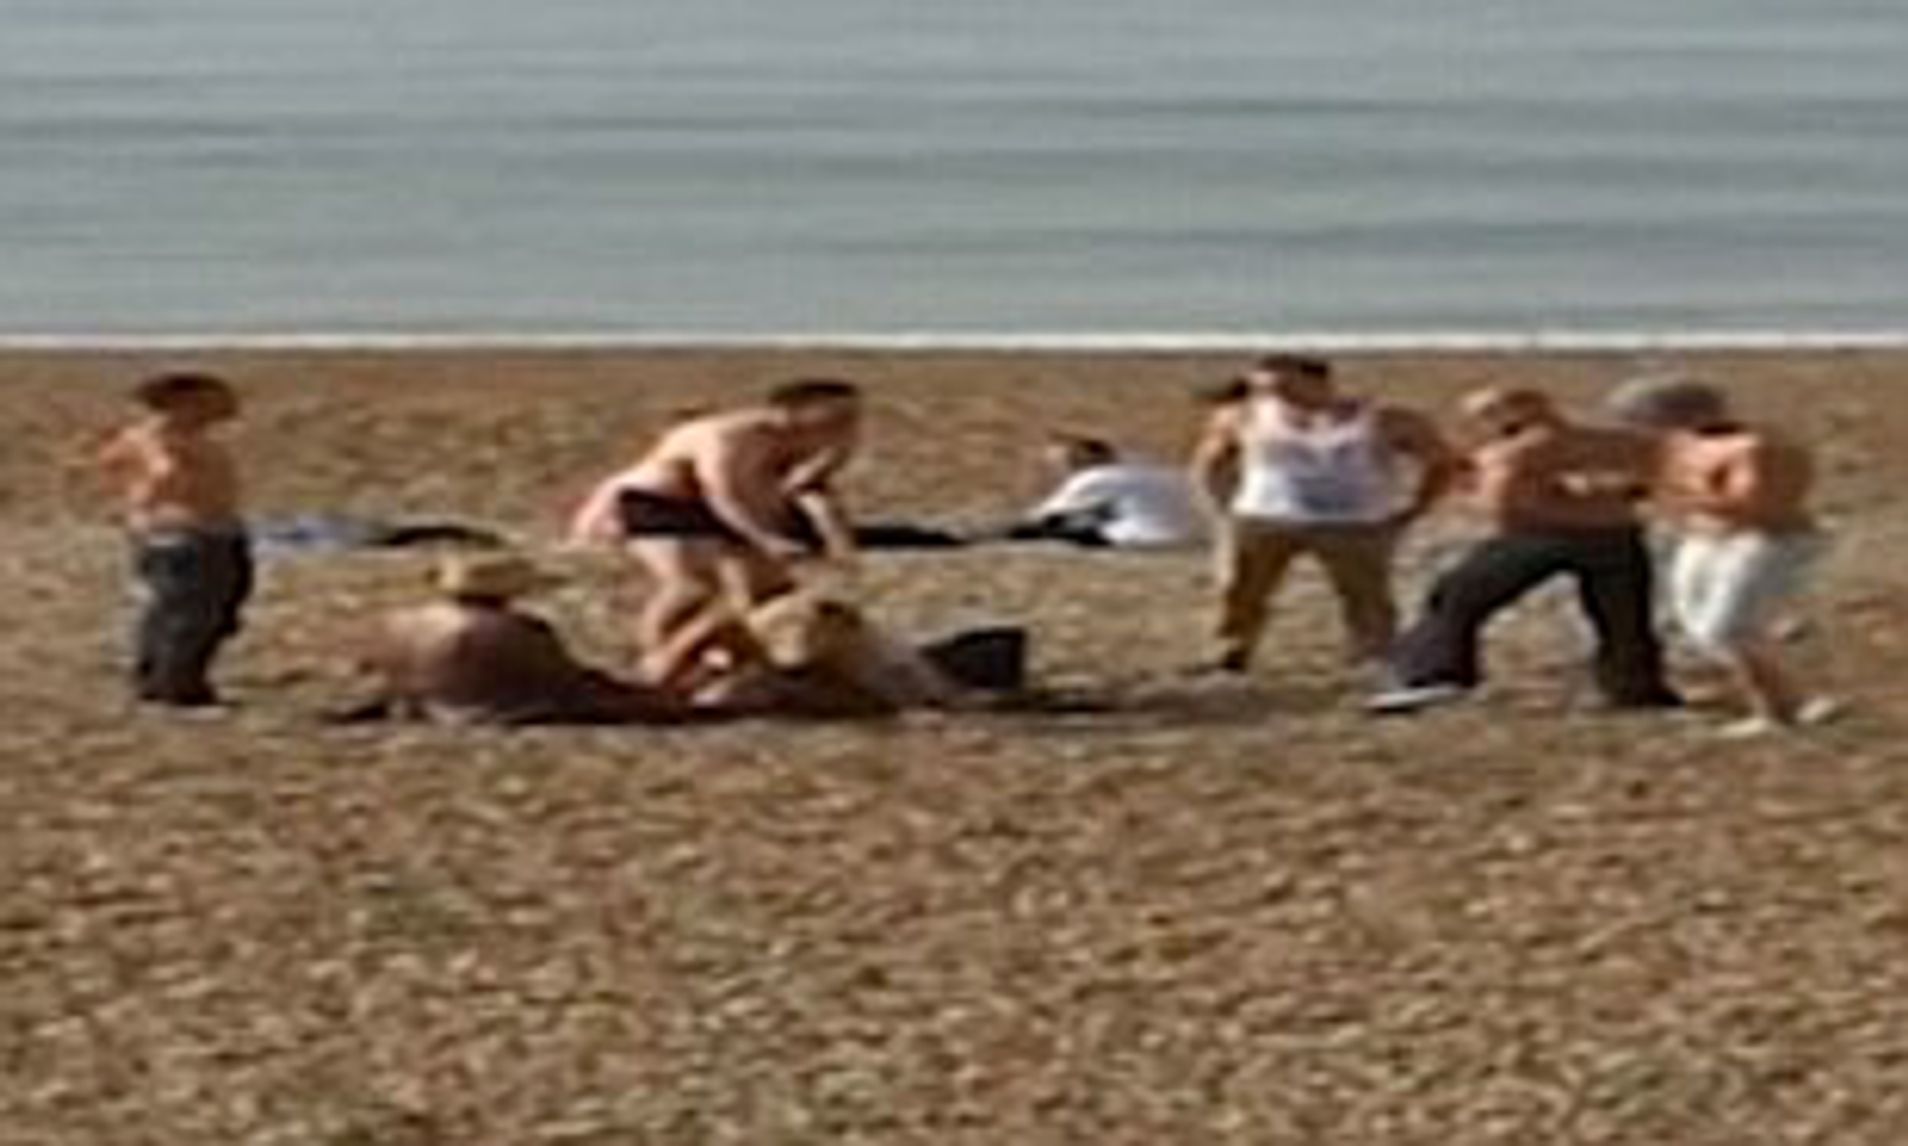 Nude sex on beach